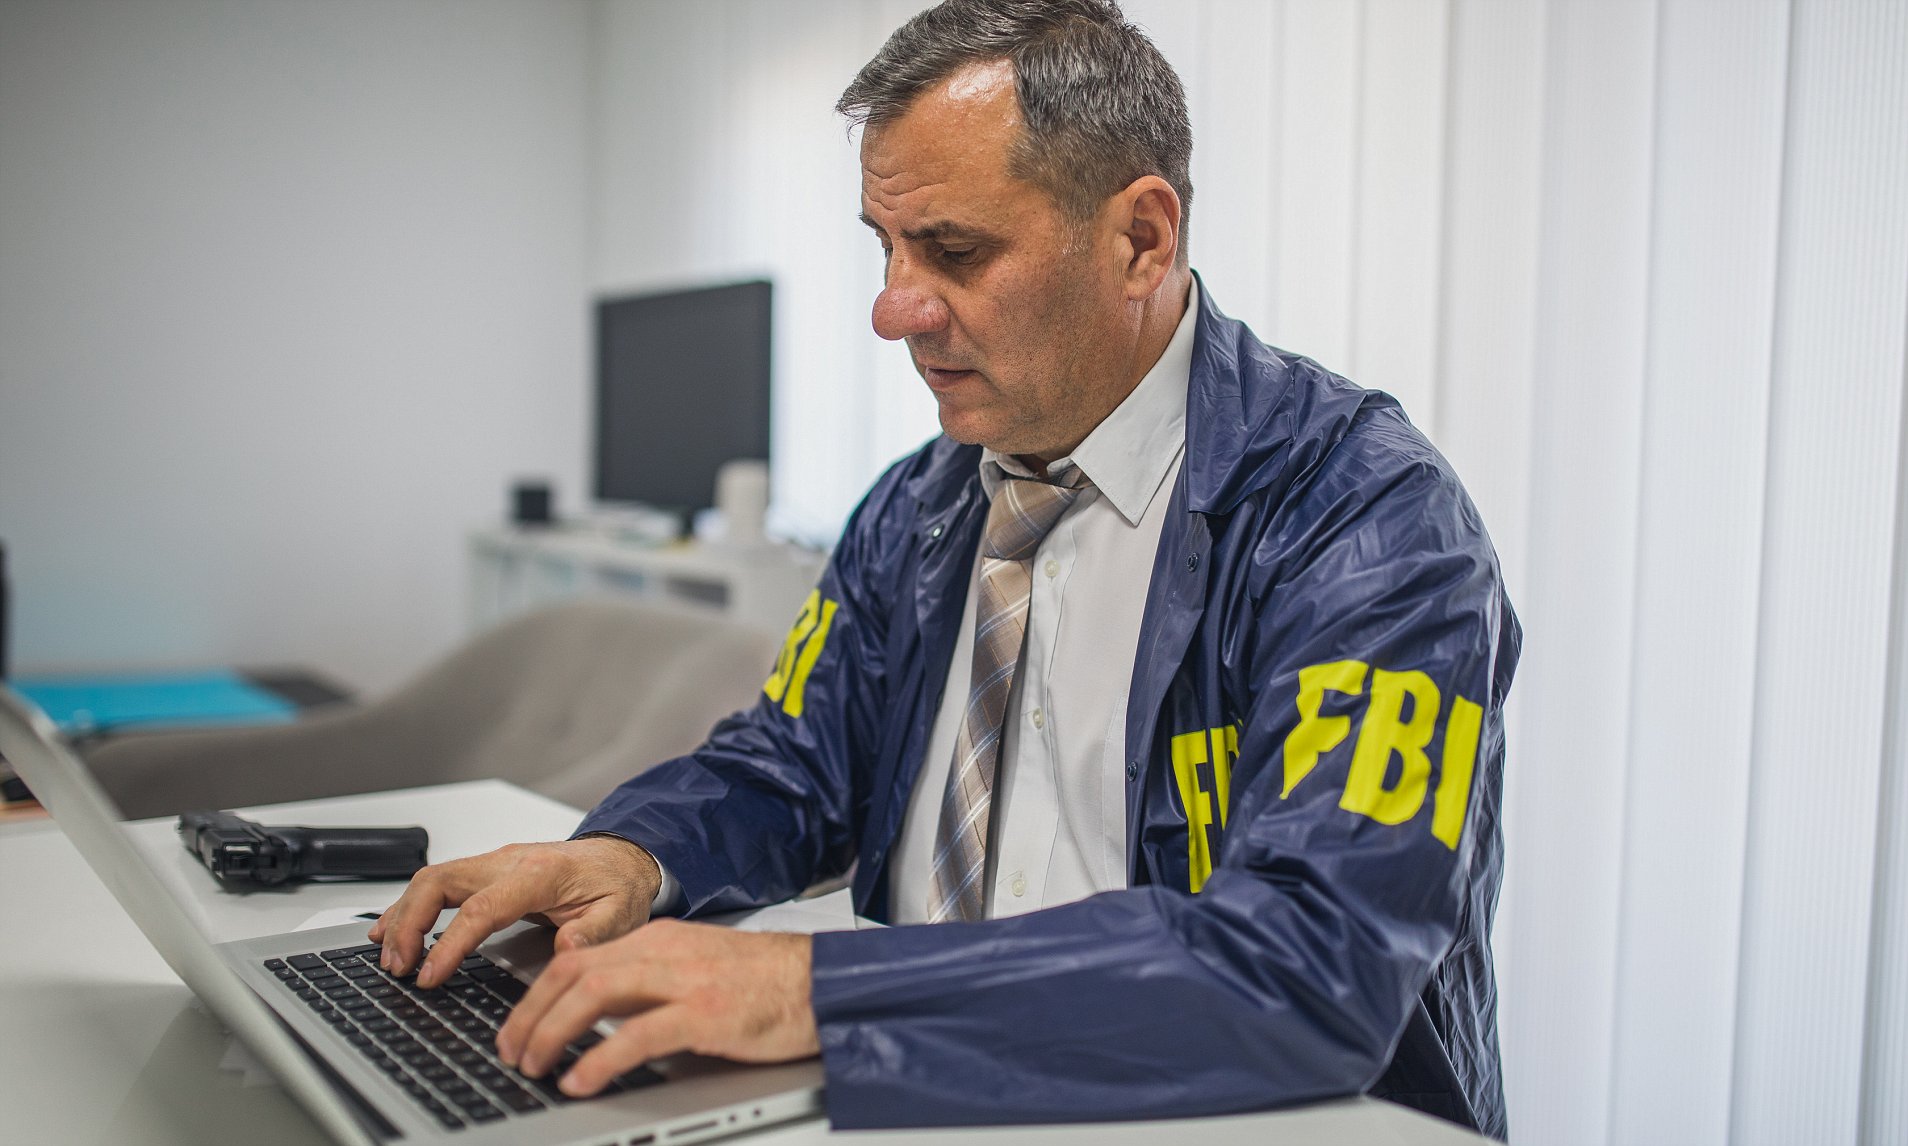 FBI Agent typing